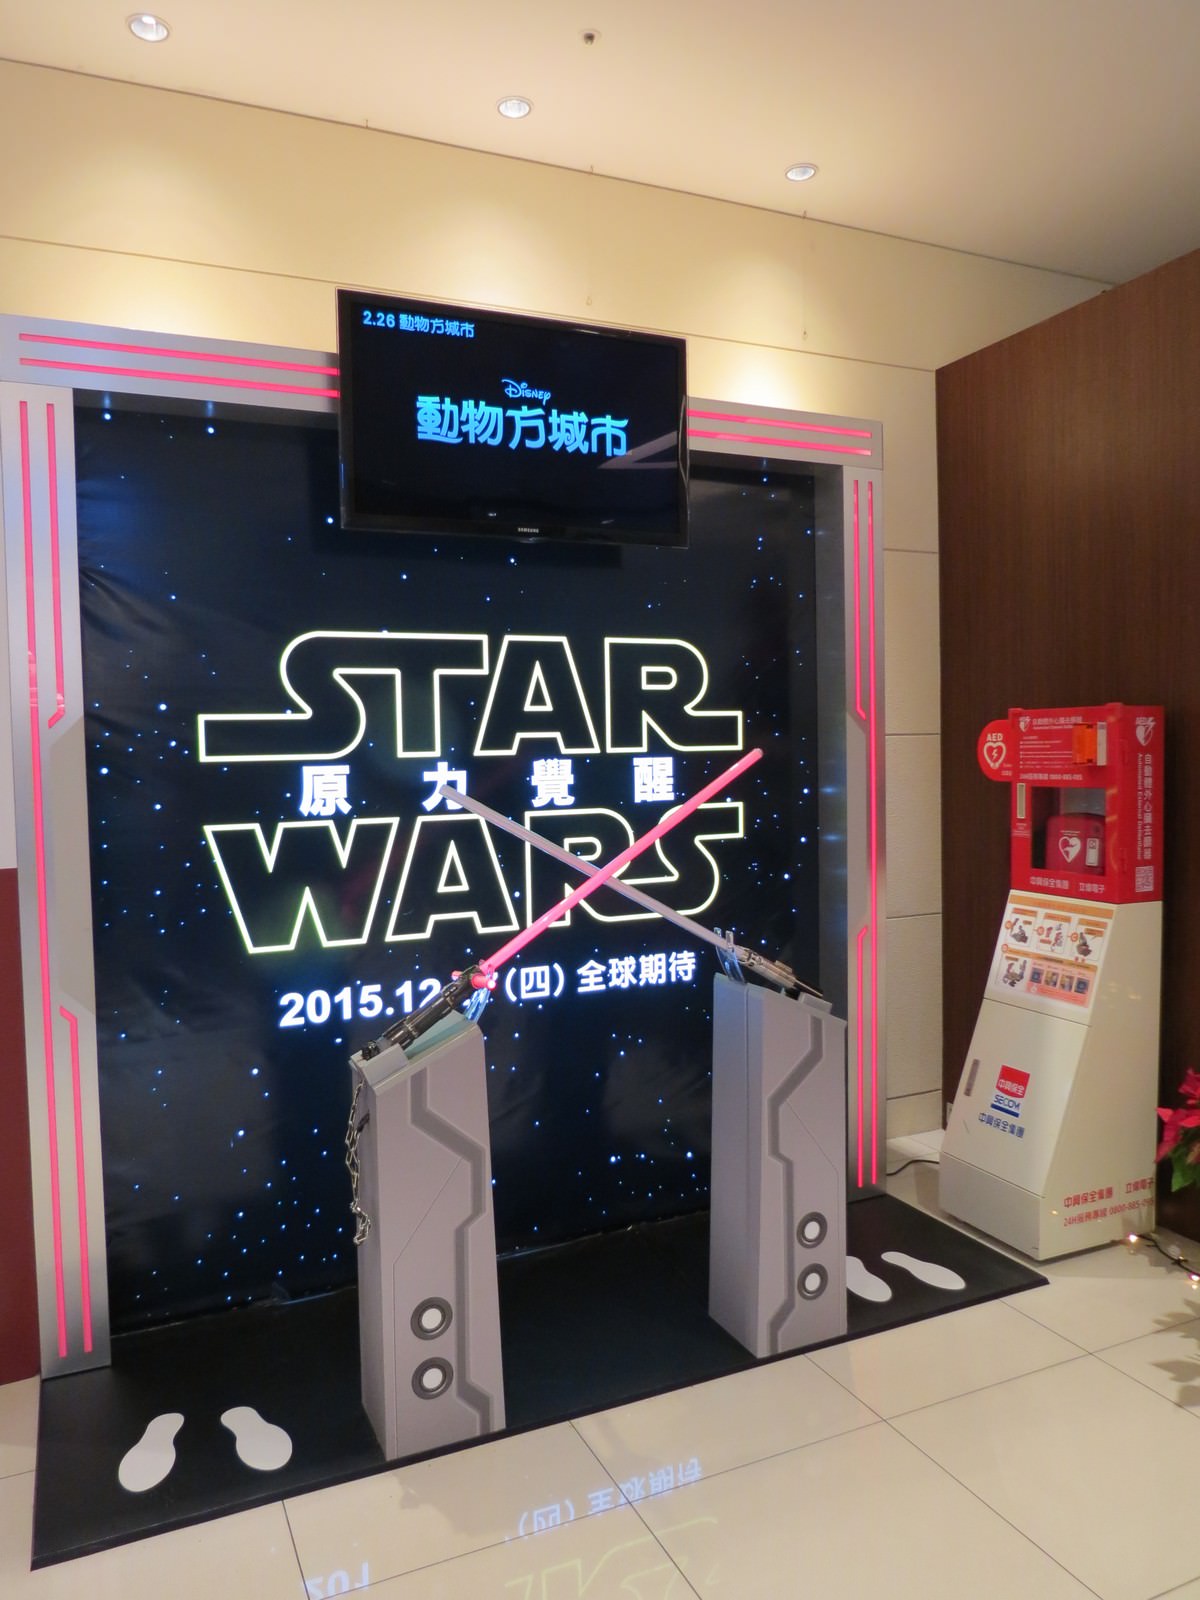 Movie, Star Wars: The Force Awakens(美國, 2015) / STAR WARS：原力覺醒(台灣) / 星球大战：原力觉醒(中國) / 星球大戰：原力覺醒(香港), 廣告看板, 喜樂時代影城